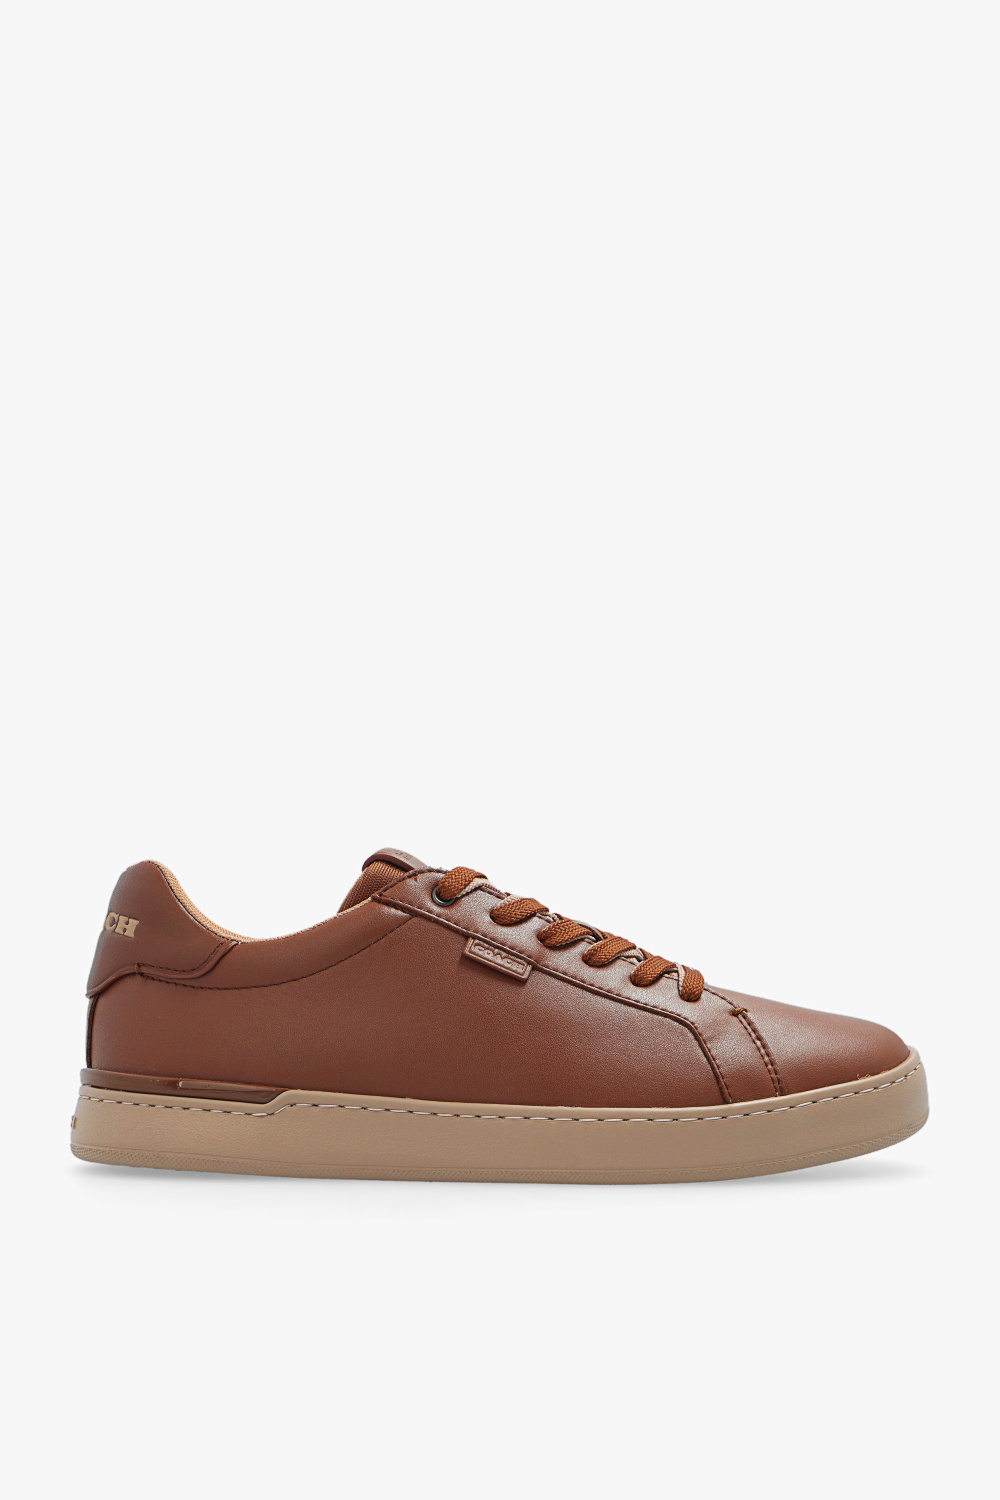 Coach ‘Lowline’ leather sneakers | Men's Shoes | Vitkac